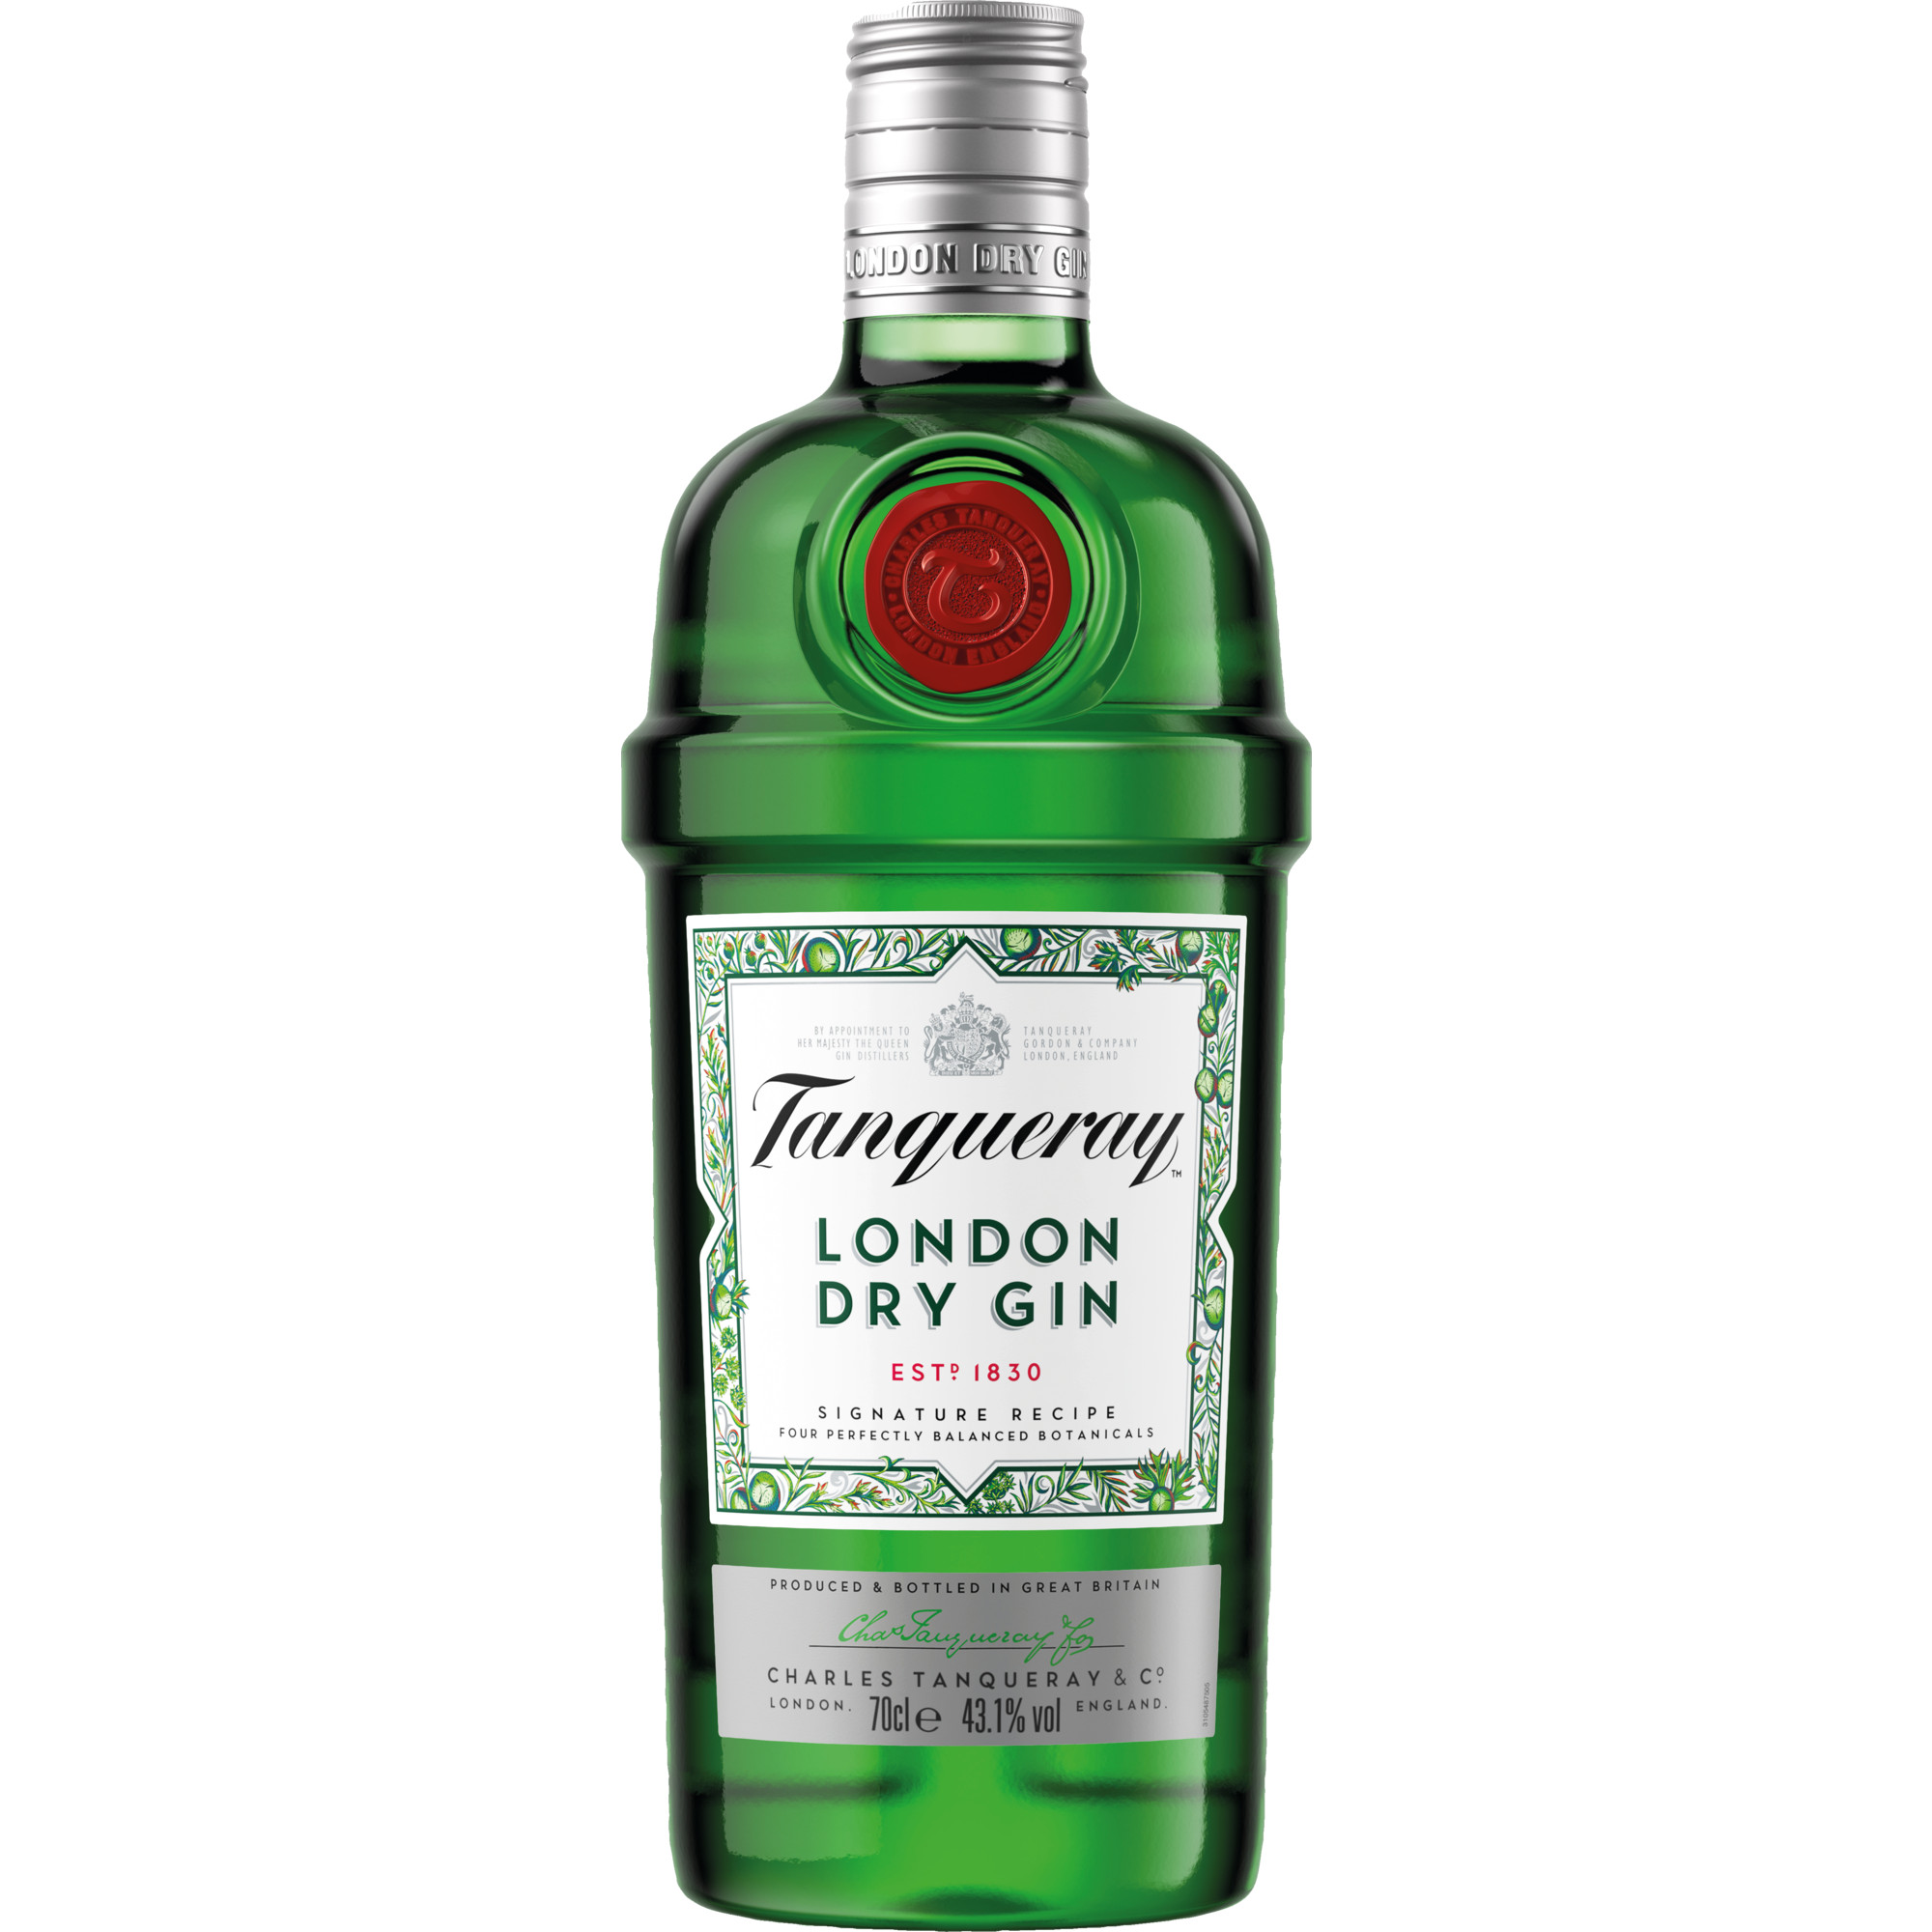 Tanqueray London Dry Gin, England, 0,70 L, 43,1 % Vol., England, Spirituosen  Spirituosen Hawesko